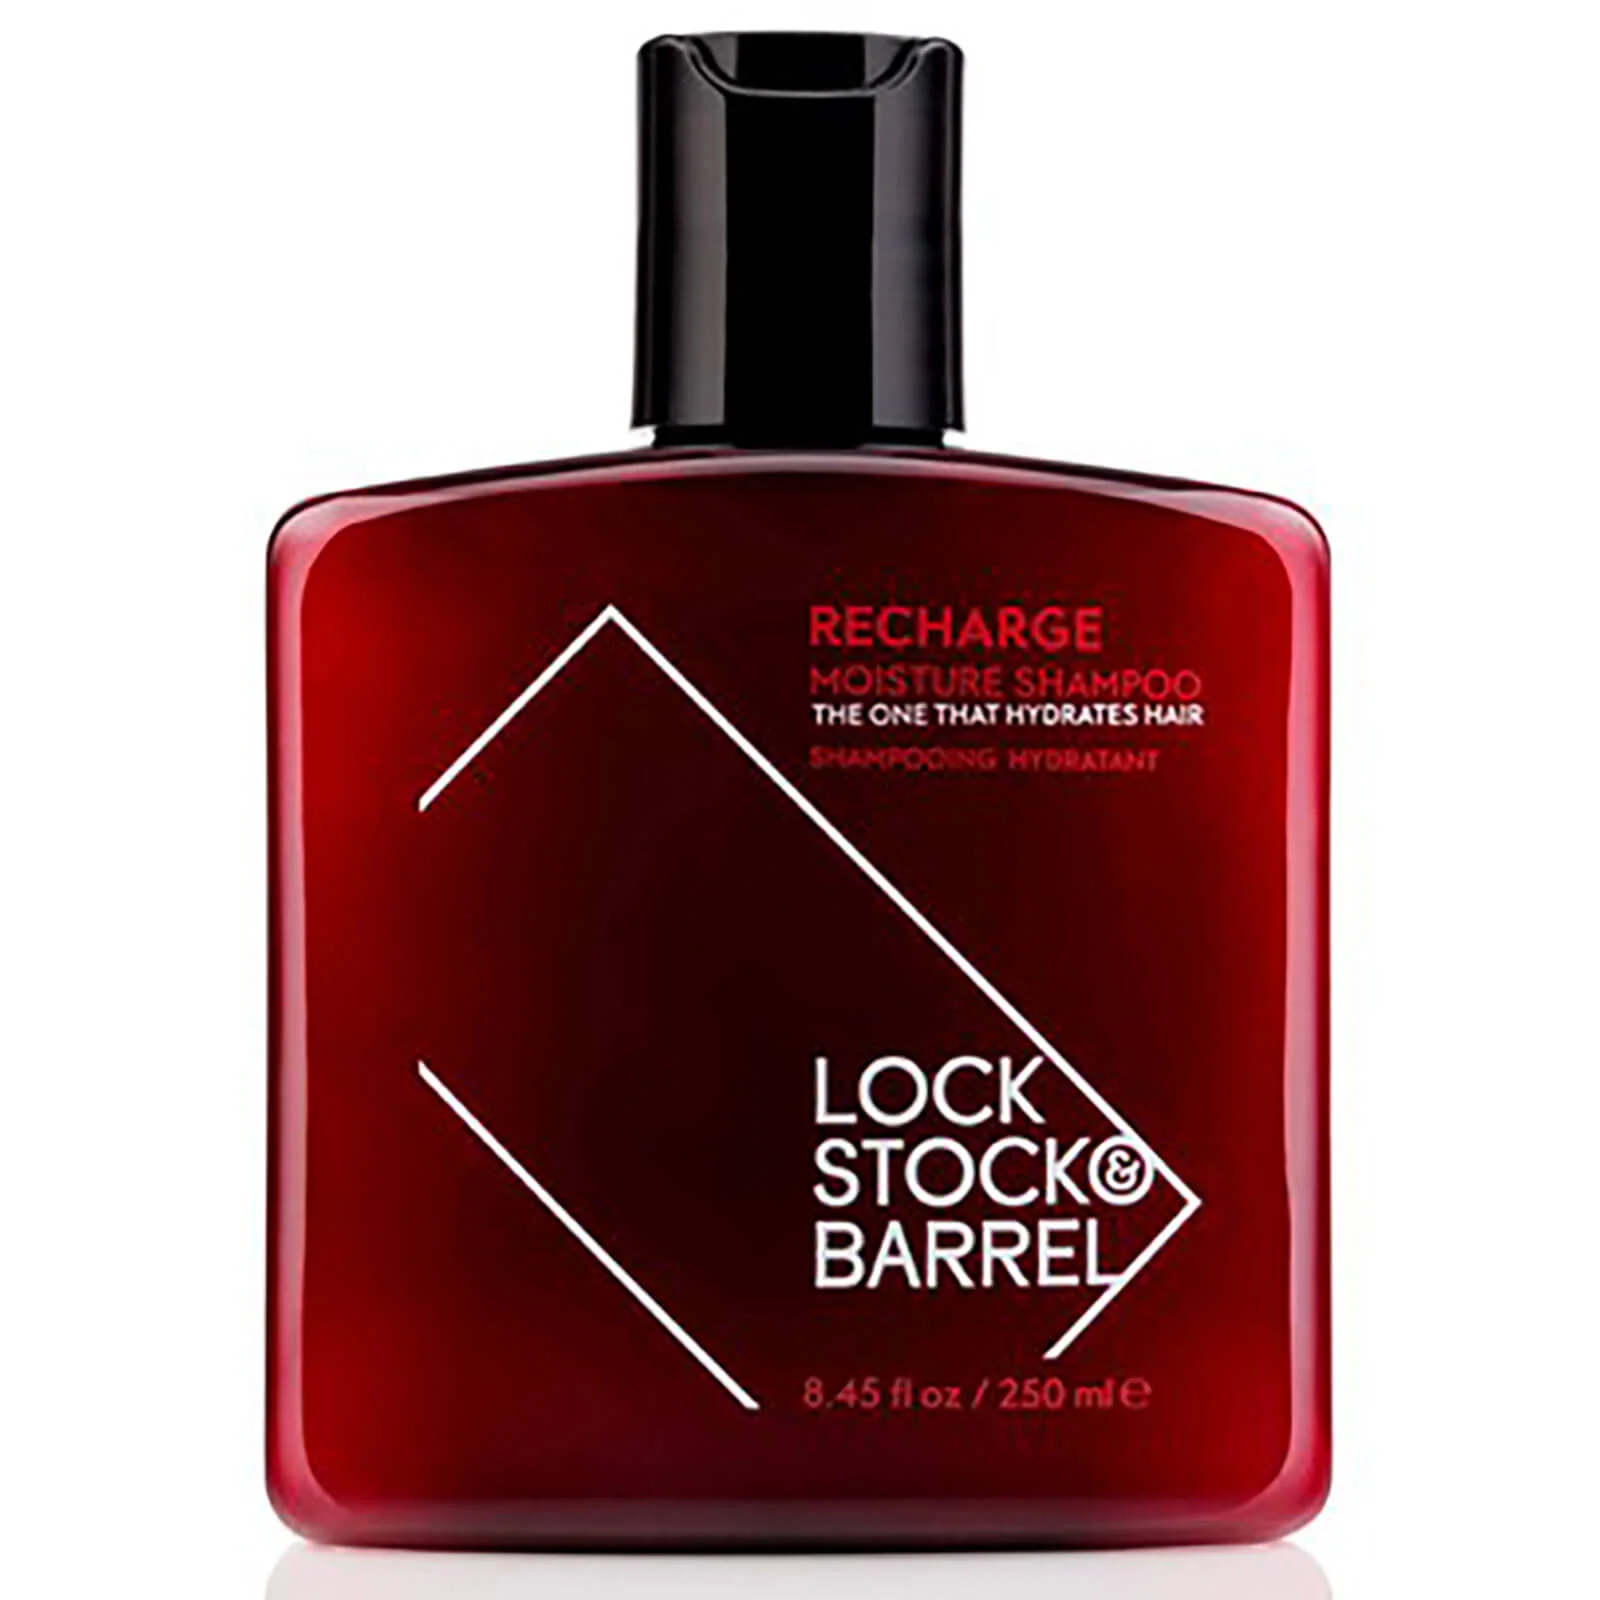 Lock Stock & Barrel Recharge Moisture Shampoo (250ml) Image 1